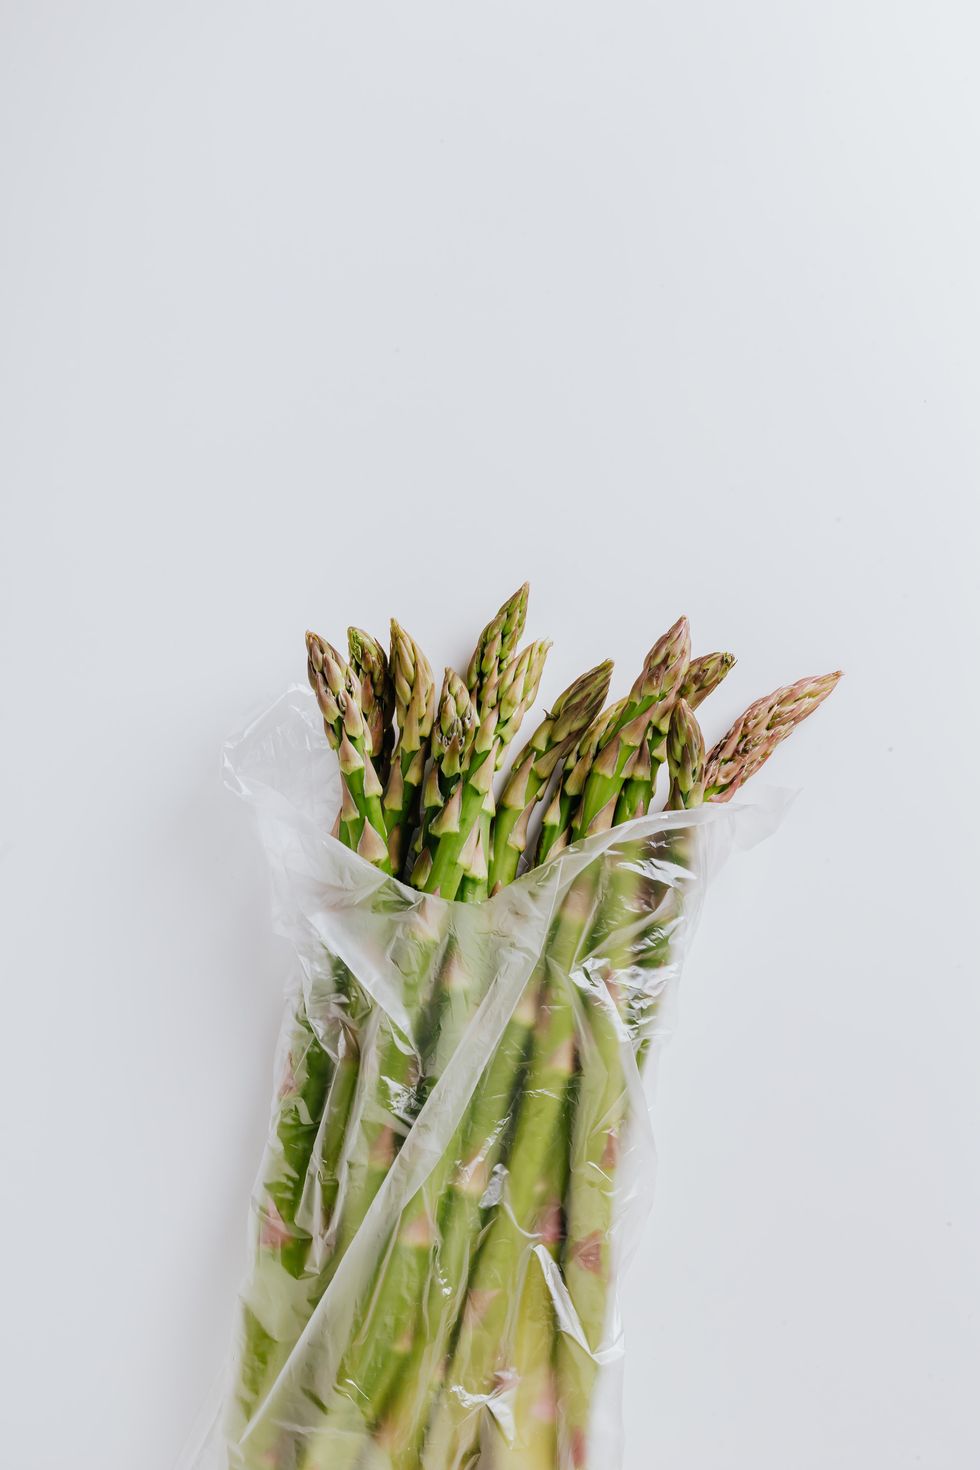 asparagus stems in plastic bag